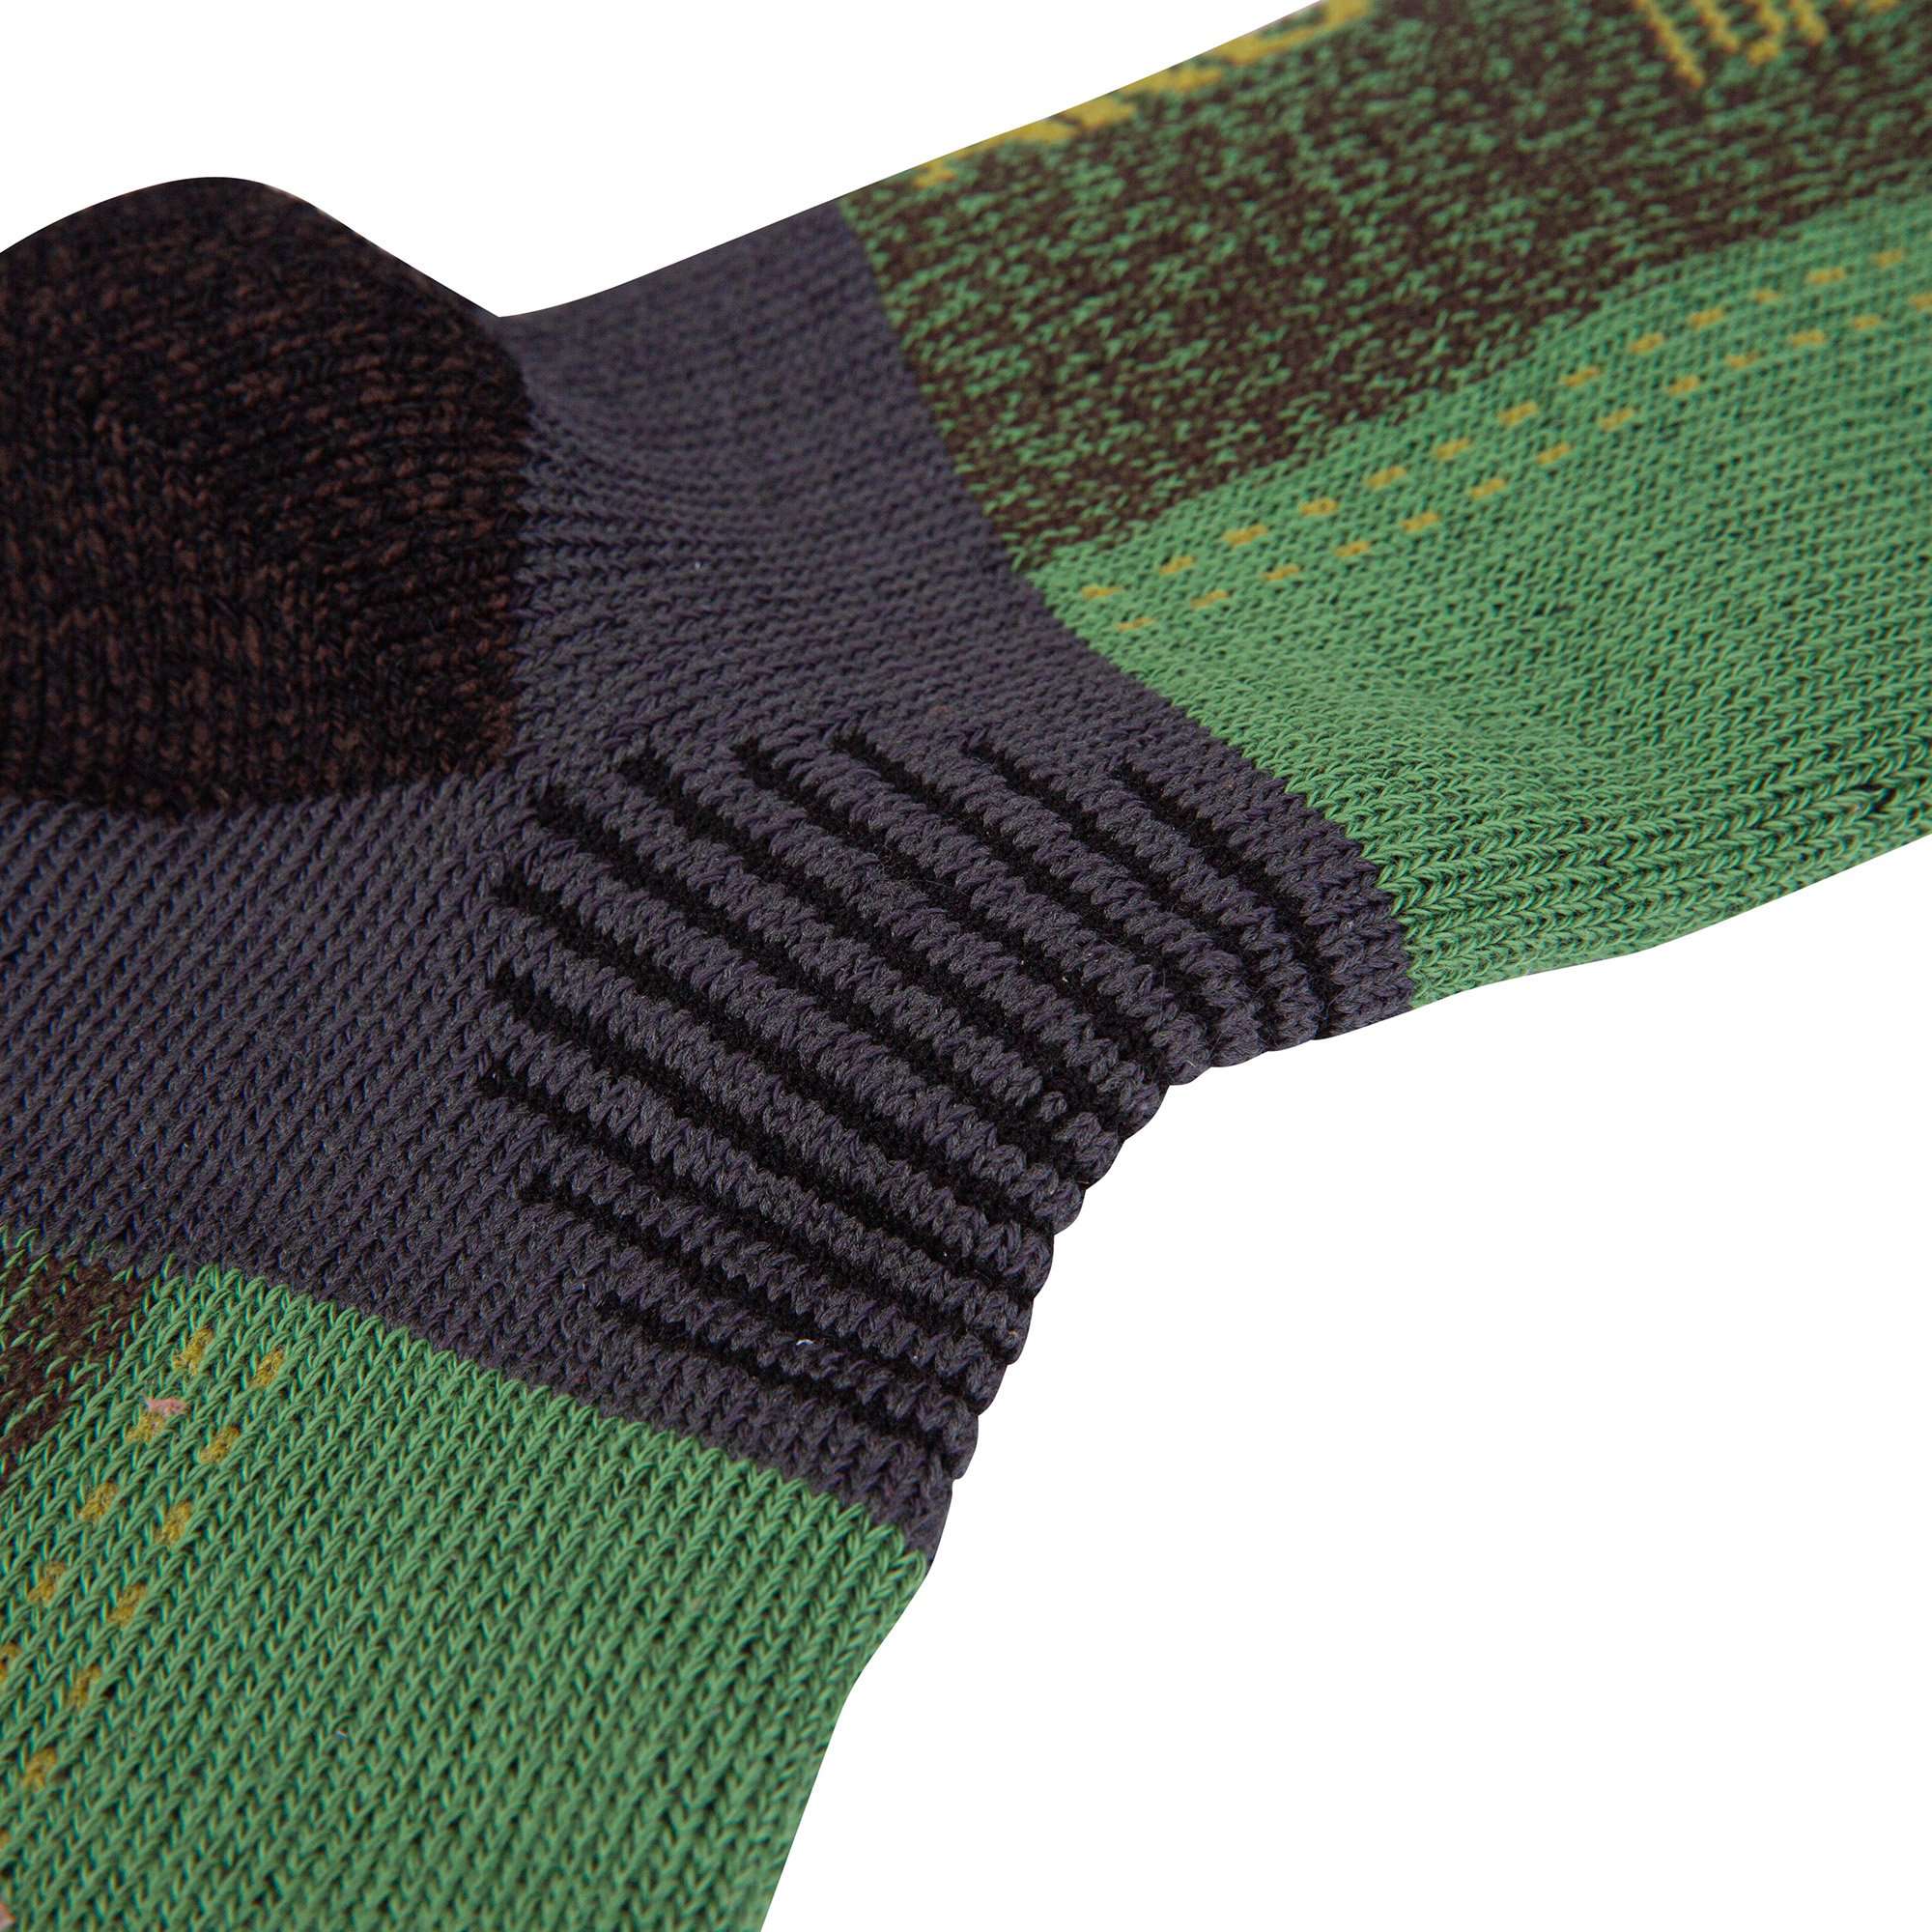 Xpert Lo Work Sock - Green / Grey